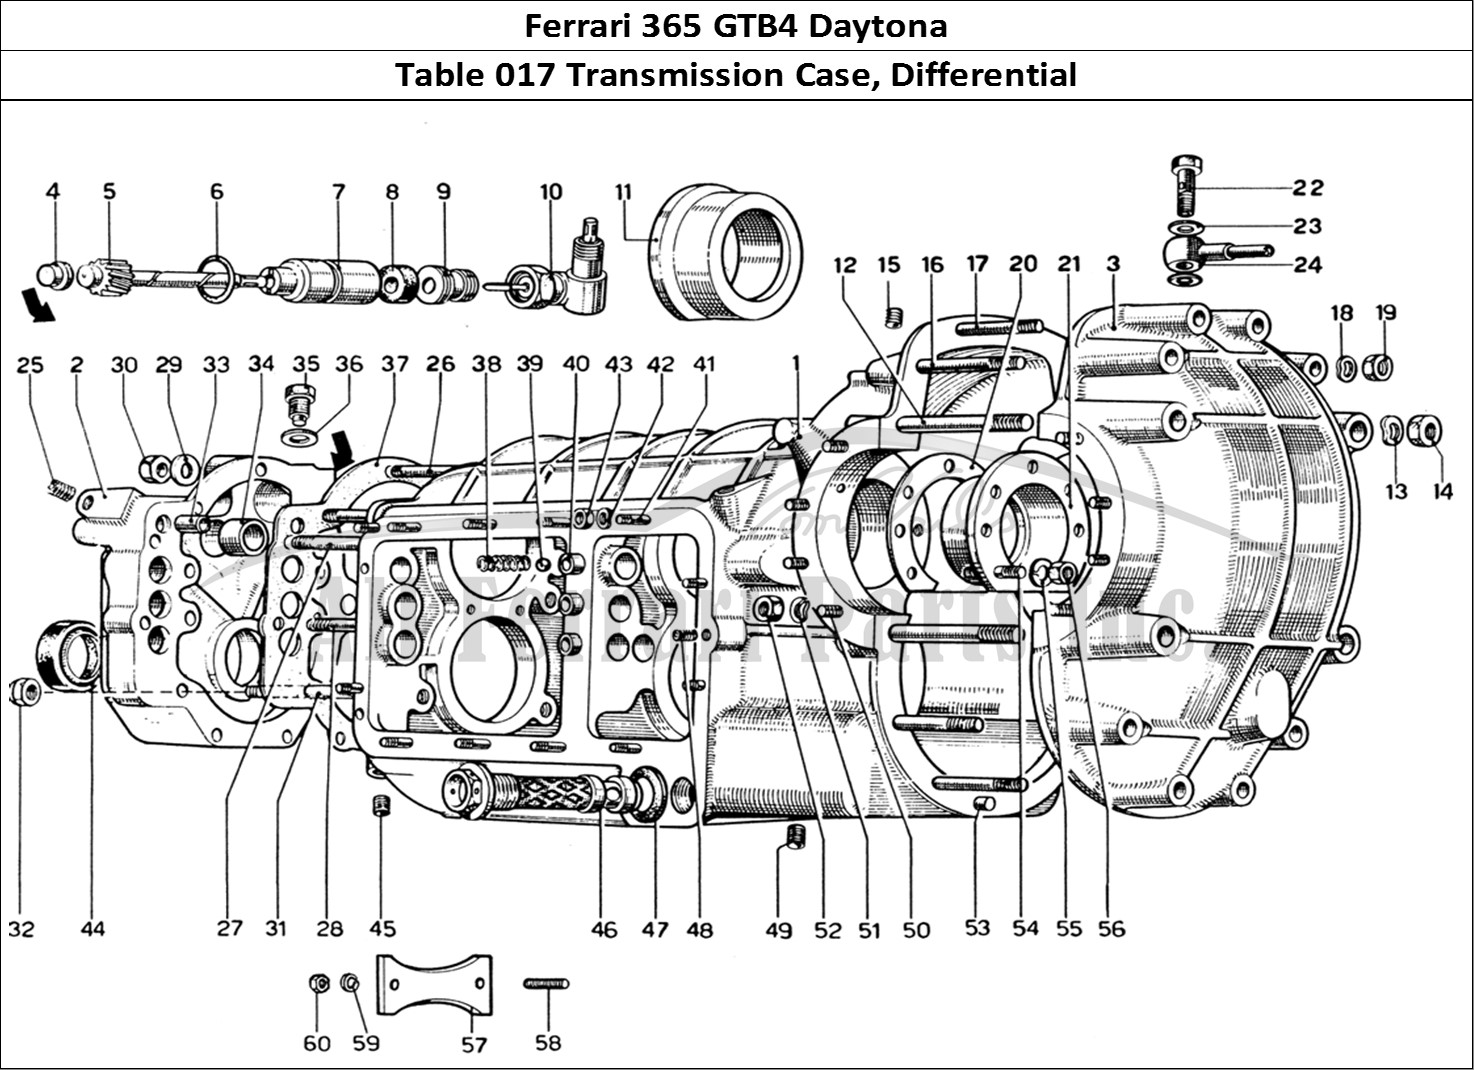 Ferrari Parts Ferrari 365 GTB4 Daytona (1969) Page 017 Transmission Case - Diffe